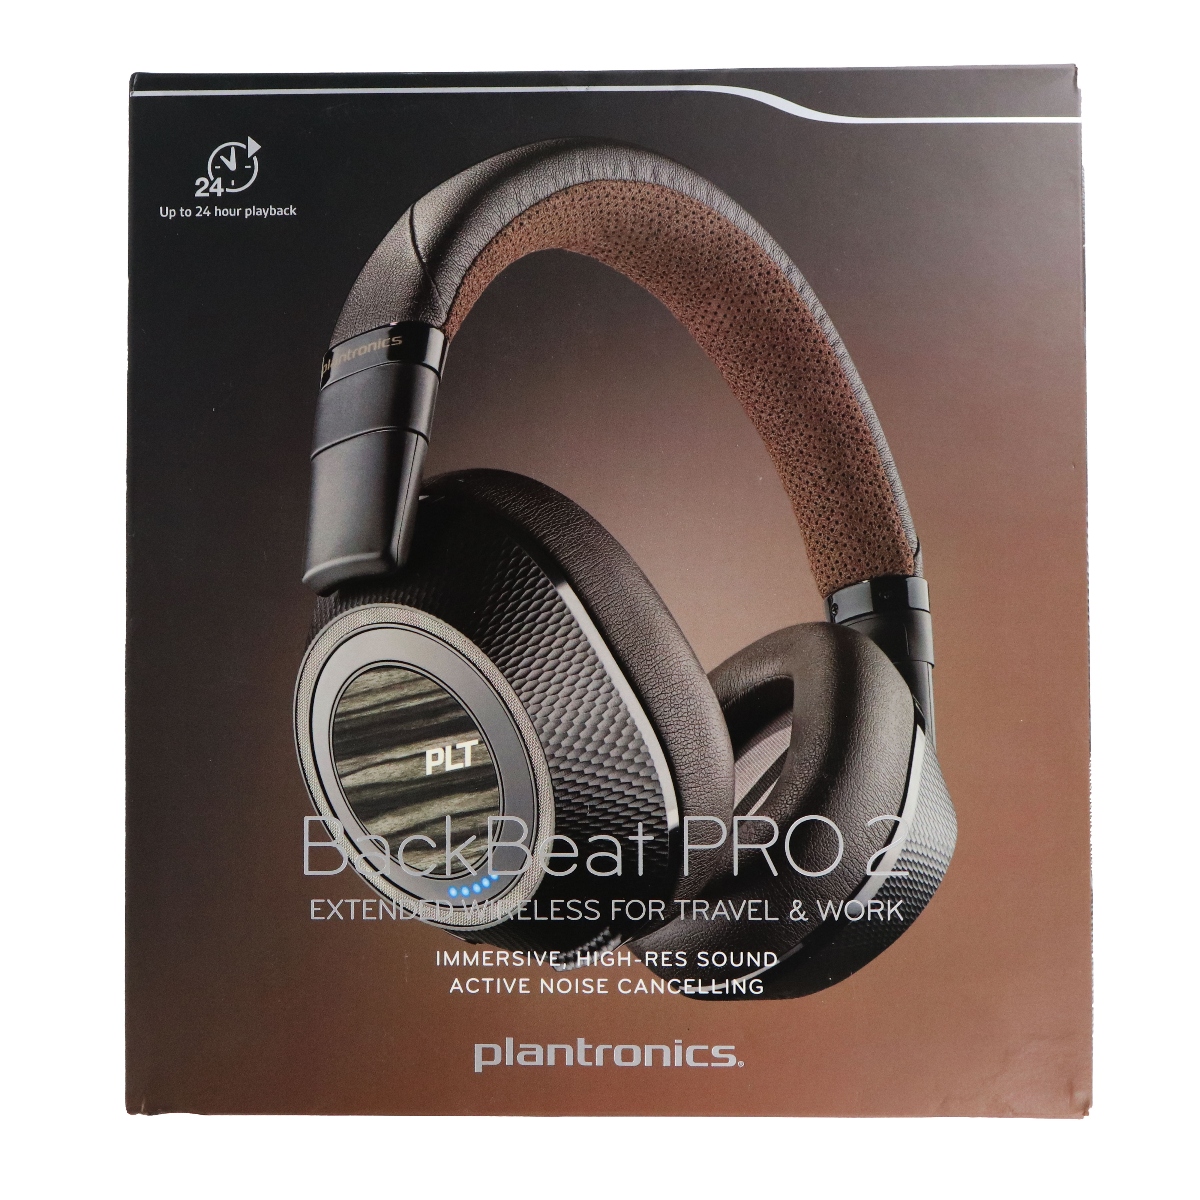 Plantronics Wrls Noise Cancelling Backbeat - Headphones (Black & Tan) (Pro 2) - image 3 of 3